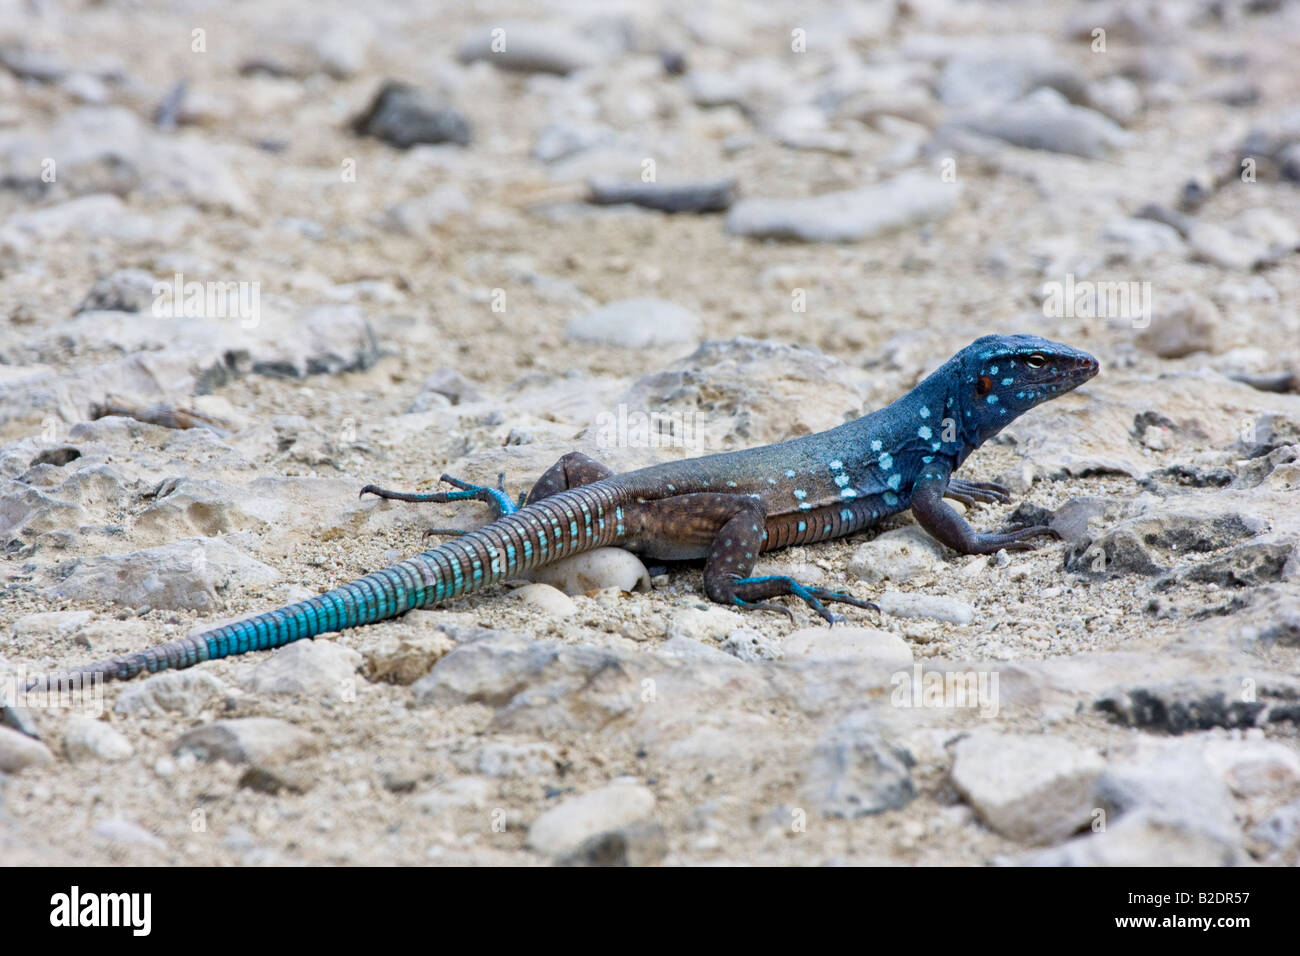 The blue whiptail lizard, Cnemidophorus murinus ruthveni, is endemic to Bonaire, Bonaire, Netherlands Antilles, Caribbean. Stock Photo